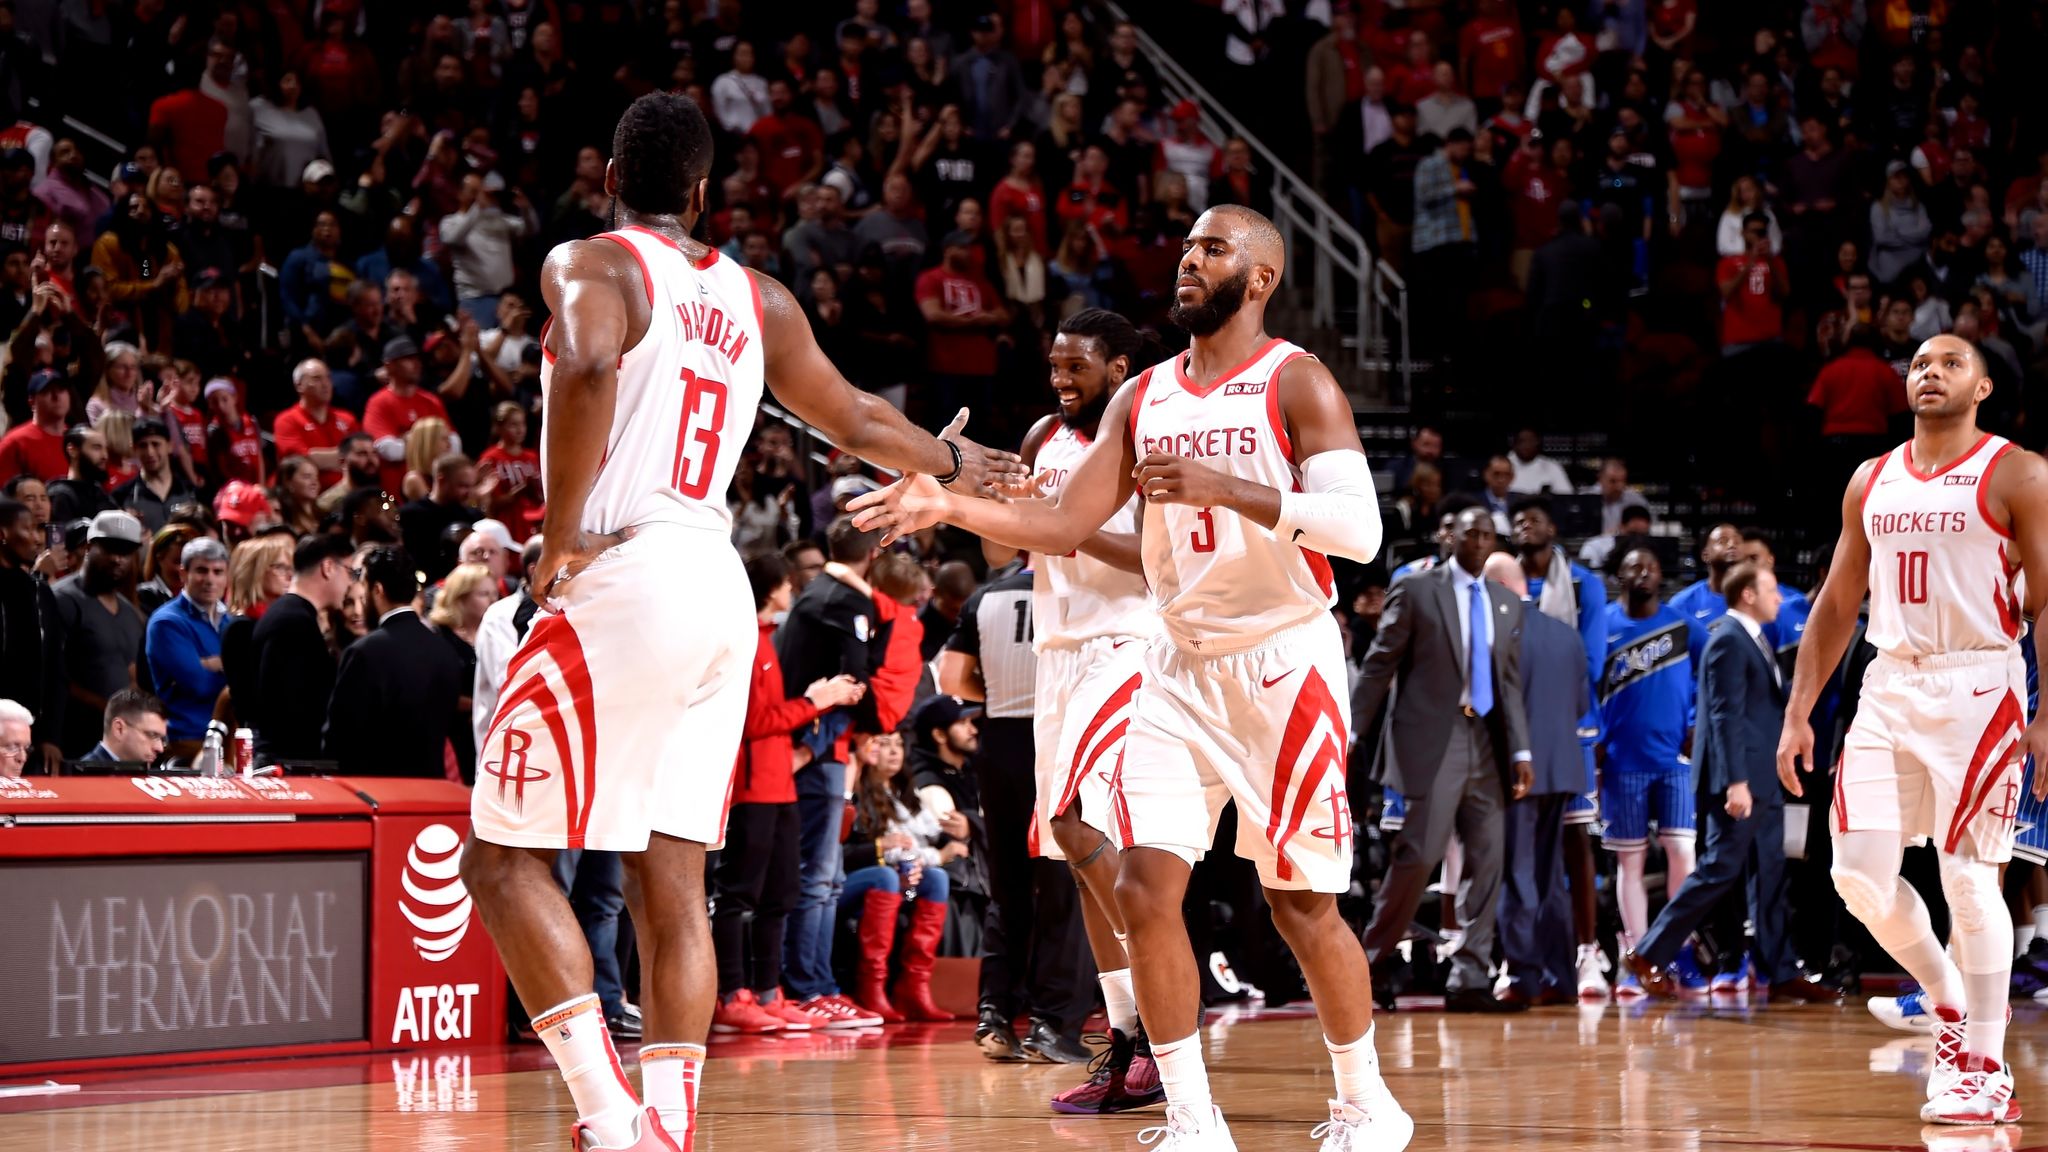 NBA round-up: Chris Paul scores 32 as Houston Rockets snap losing streak, NBA News